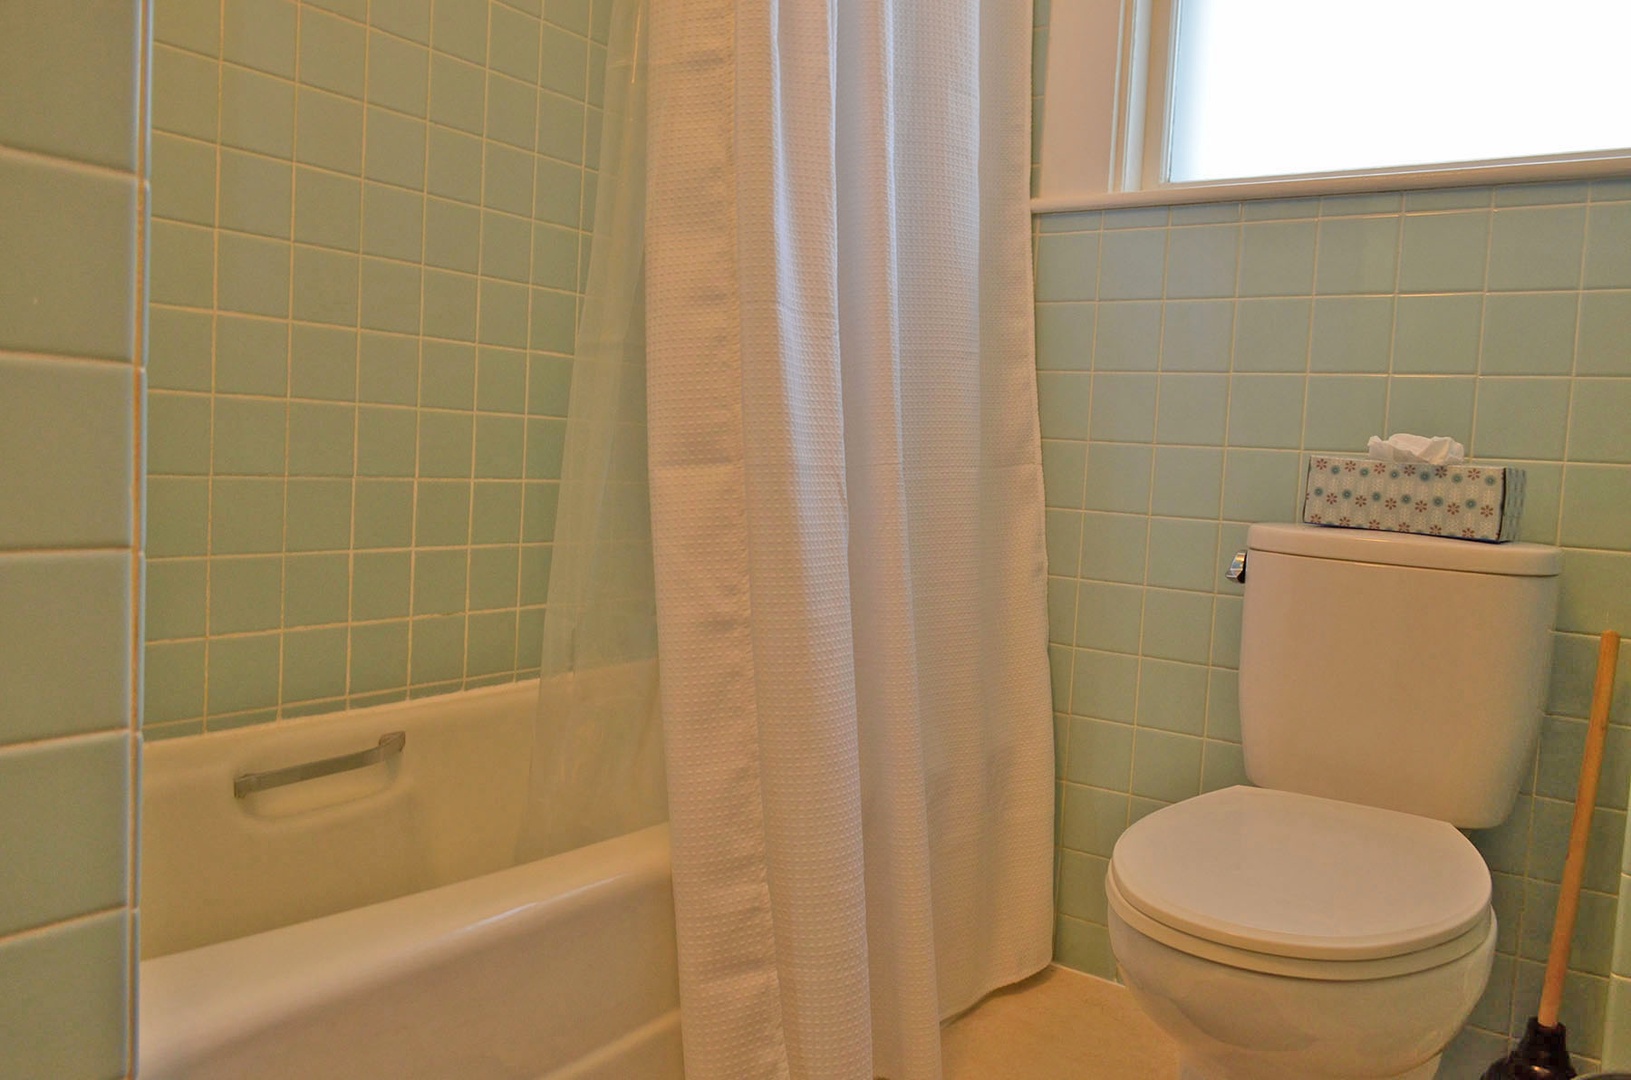 The Full Bath has a tub/shower combo.